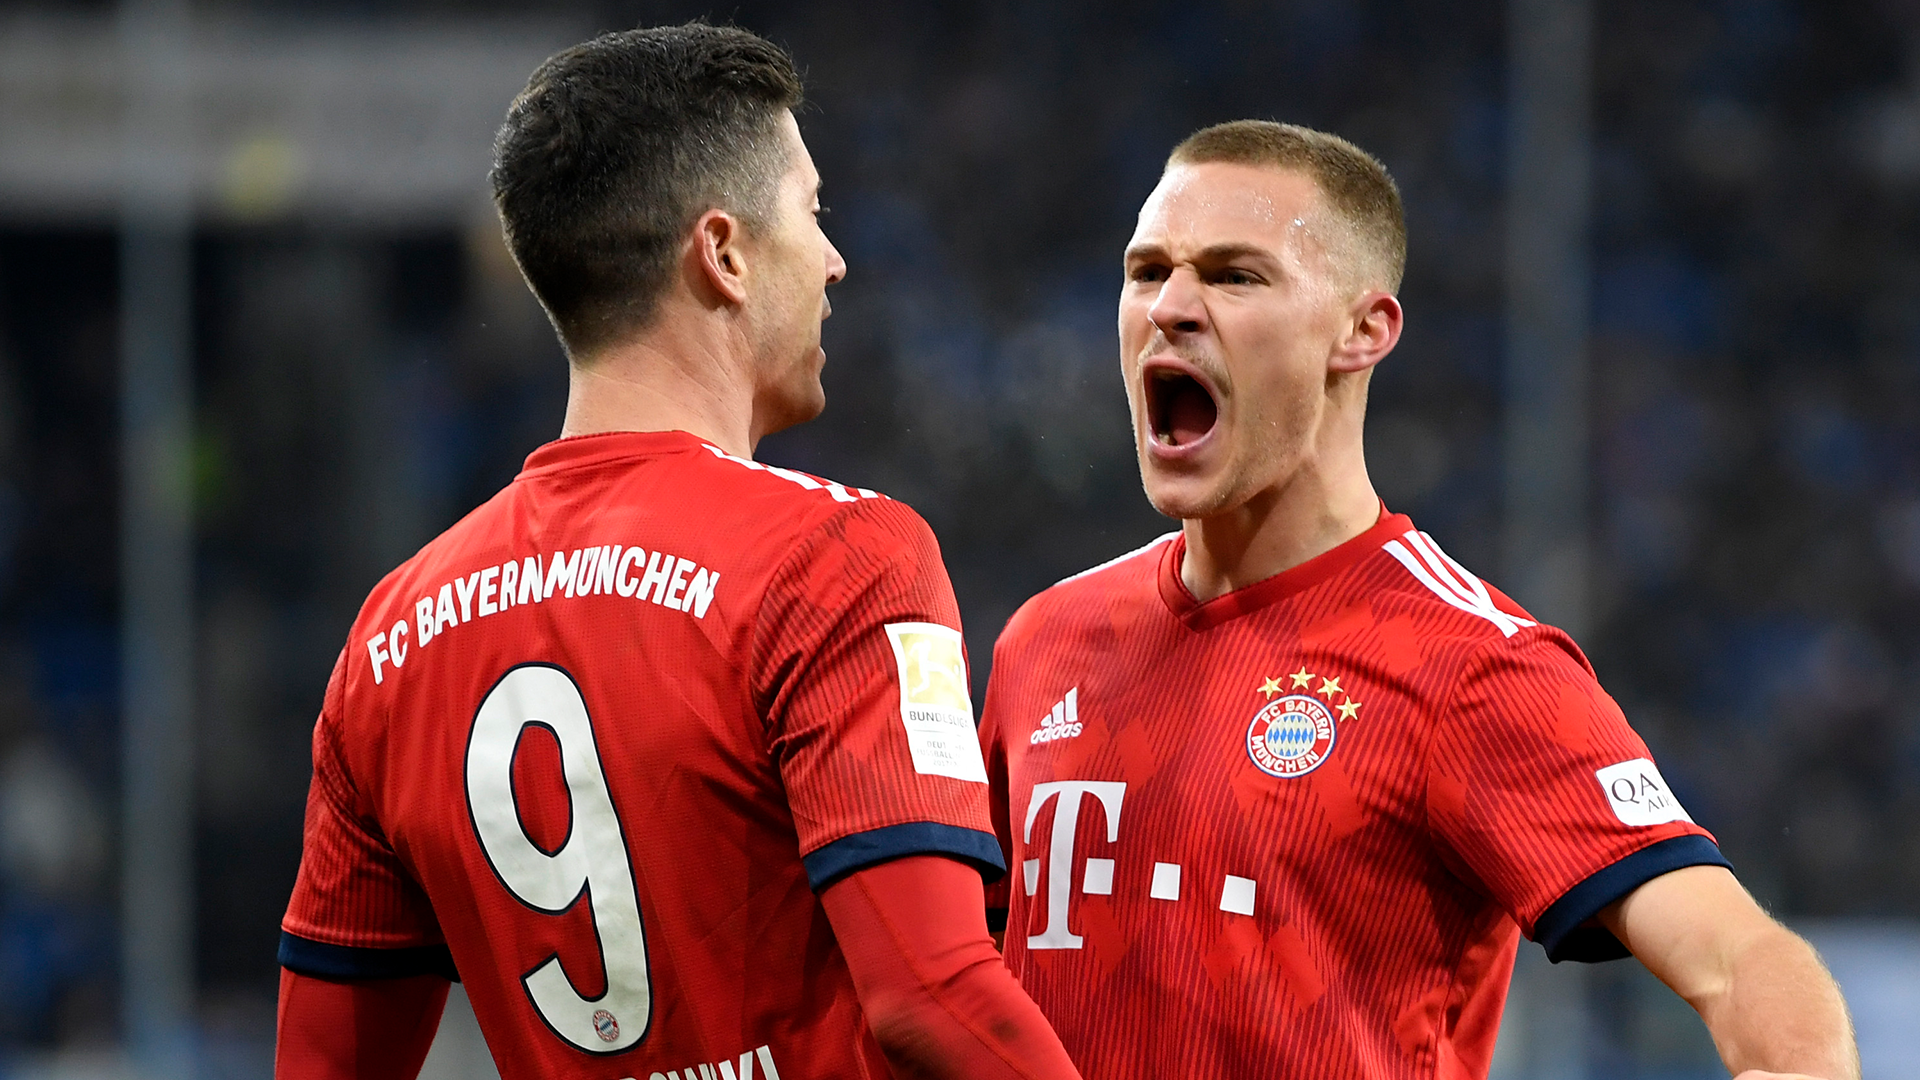 Bayern Munich, Robert Lewandowski imagine Kimmich comme futur Ballon d'Or